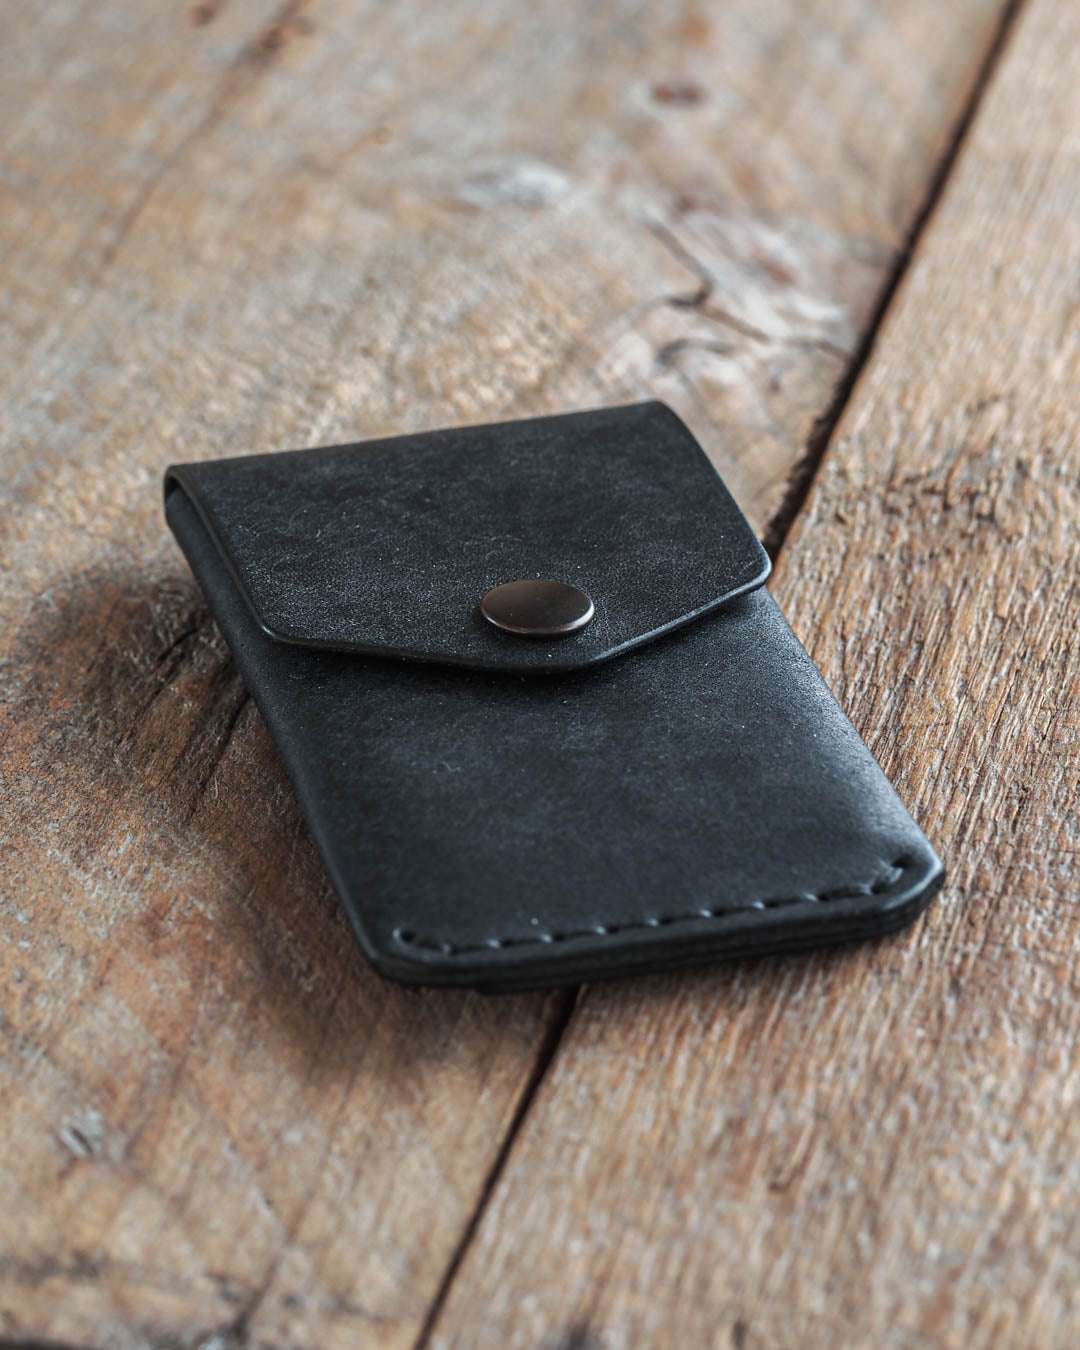 Handmade leather wallet messenger black